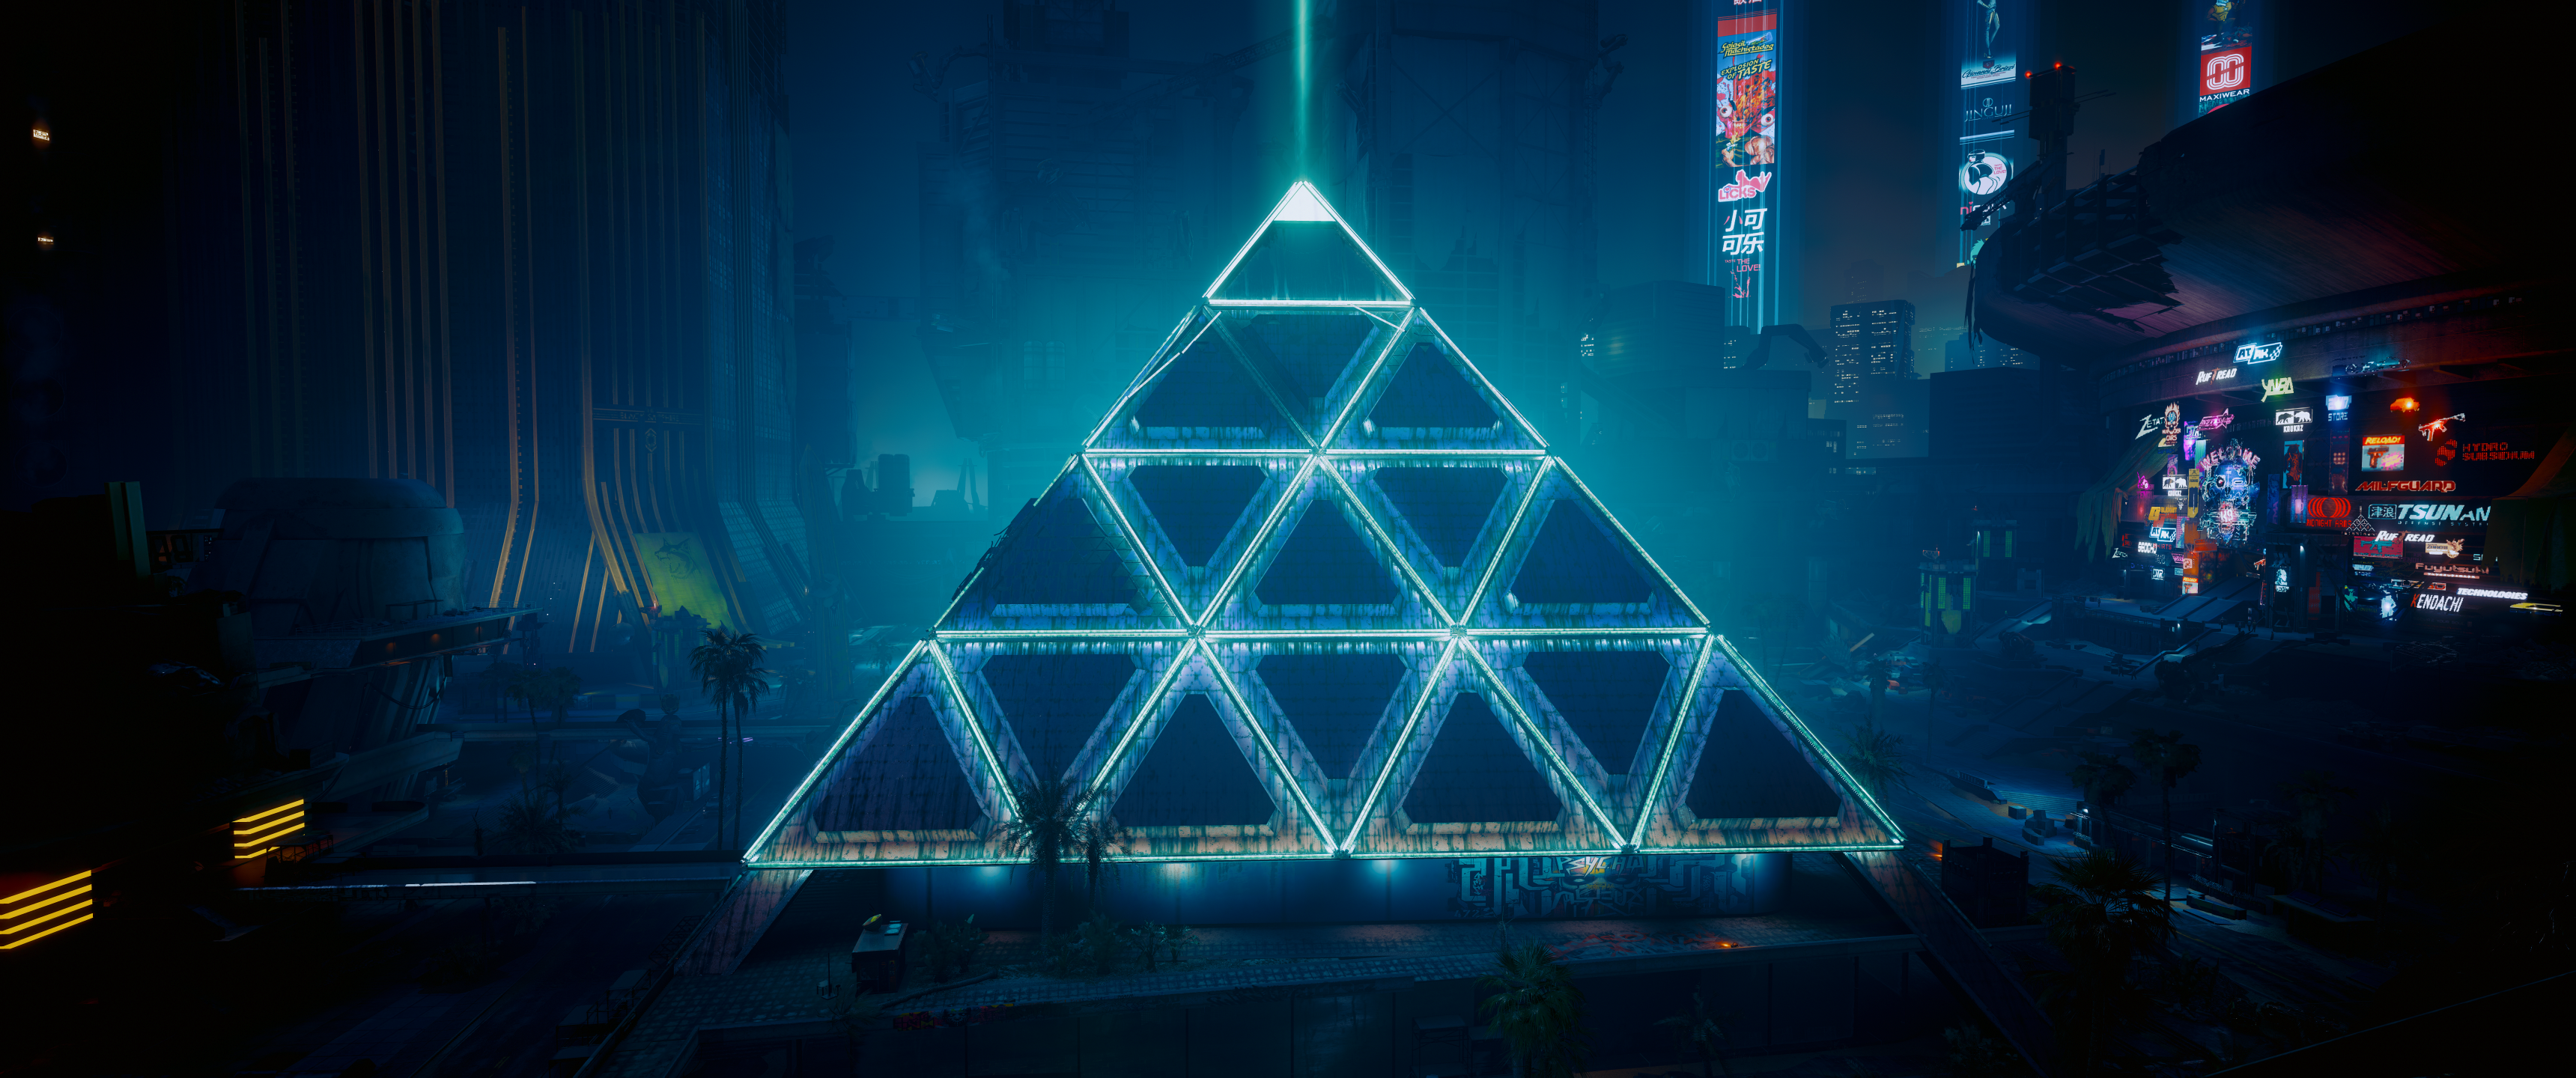 General 3440x1440 cyberpunk Cyberpunk 2077 pyramid Cyberpunk 2077 Phantom Liberty digital art video games ultrawide low light